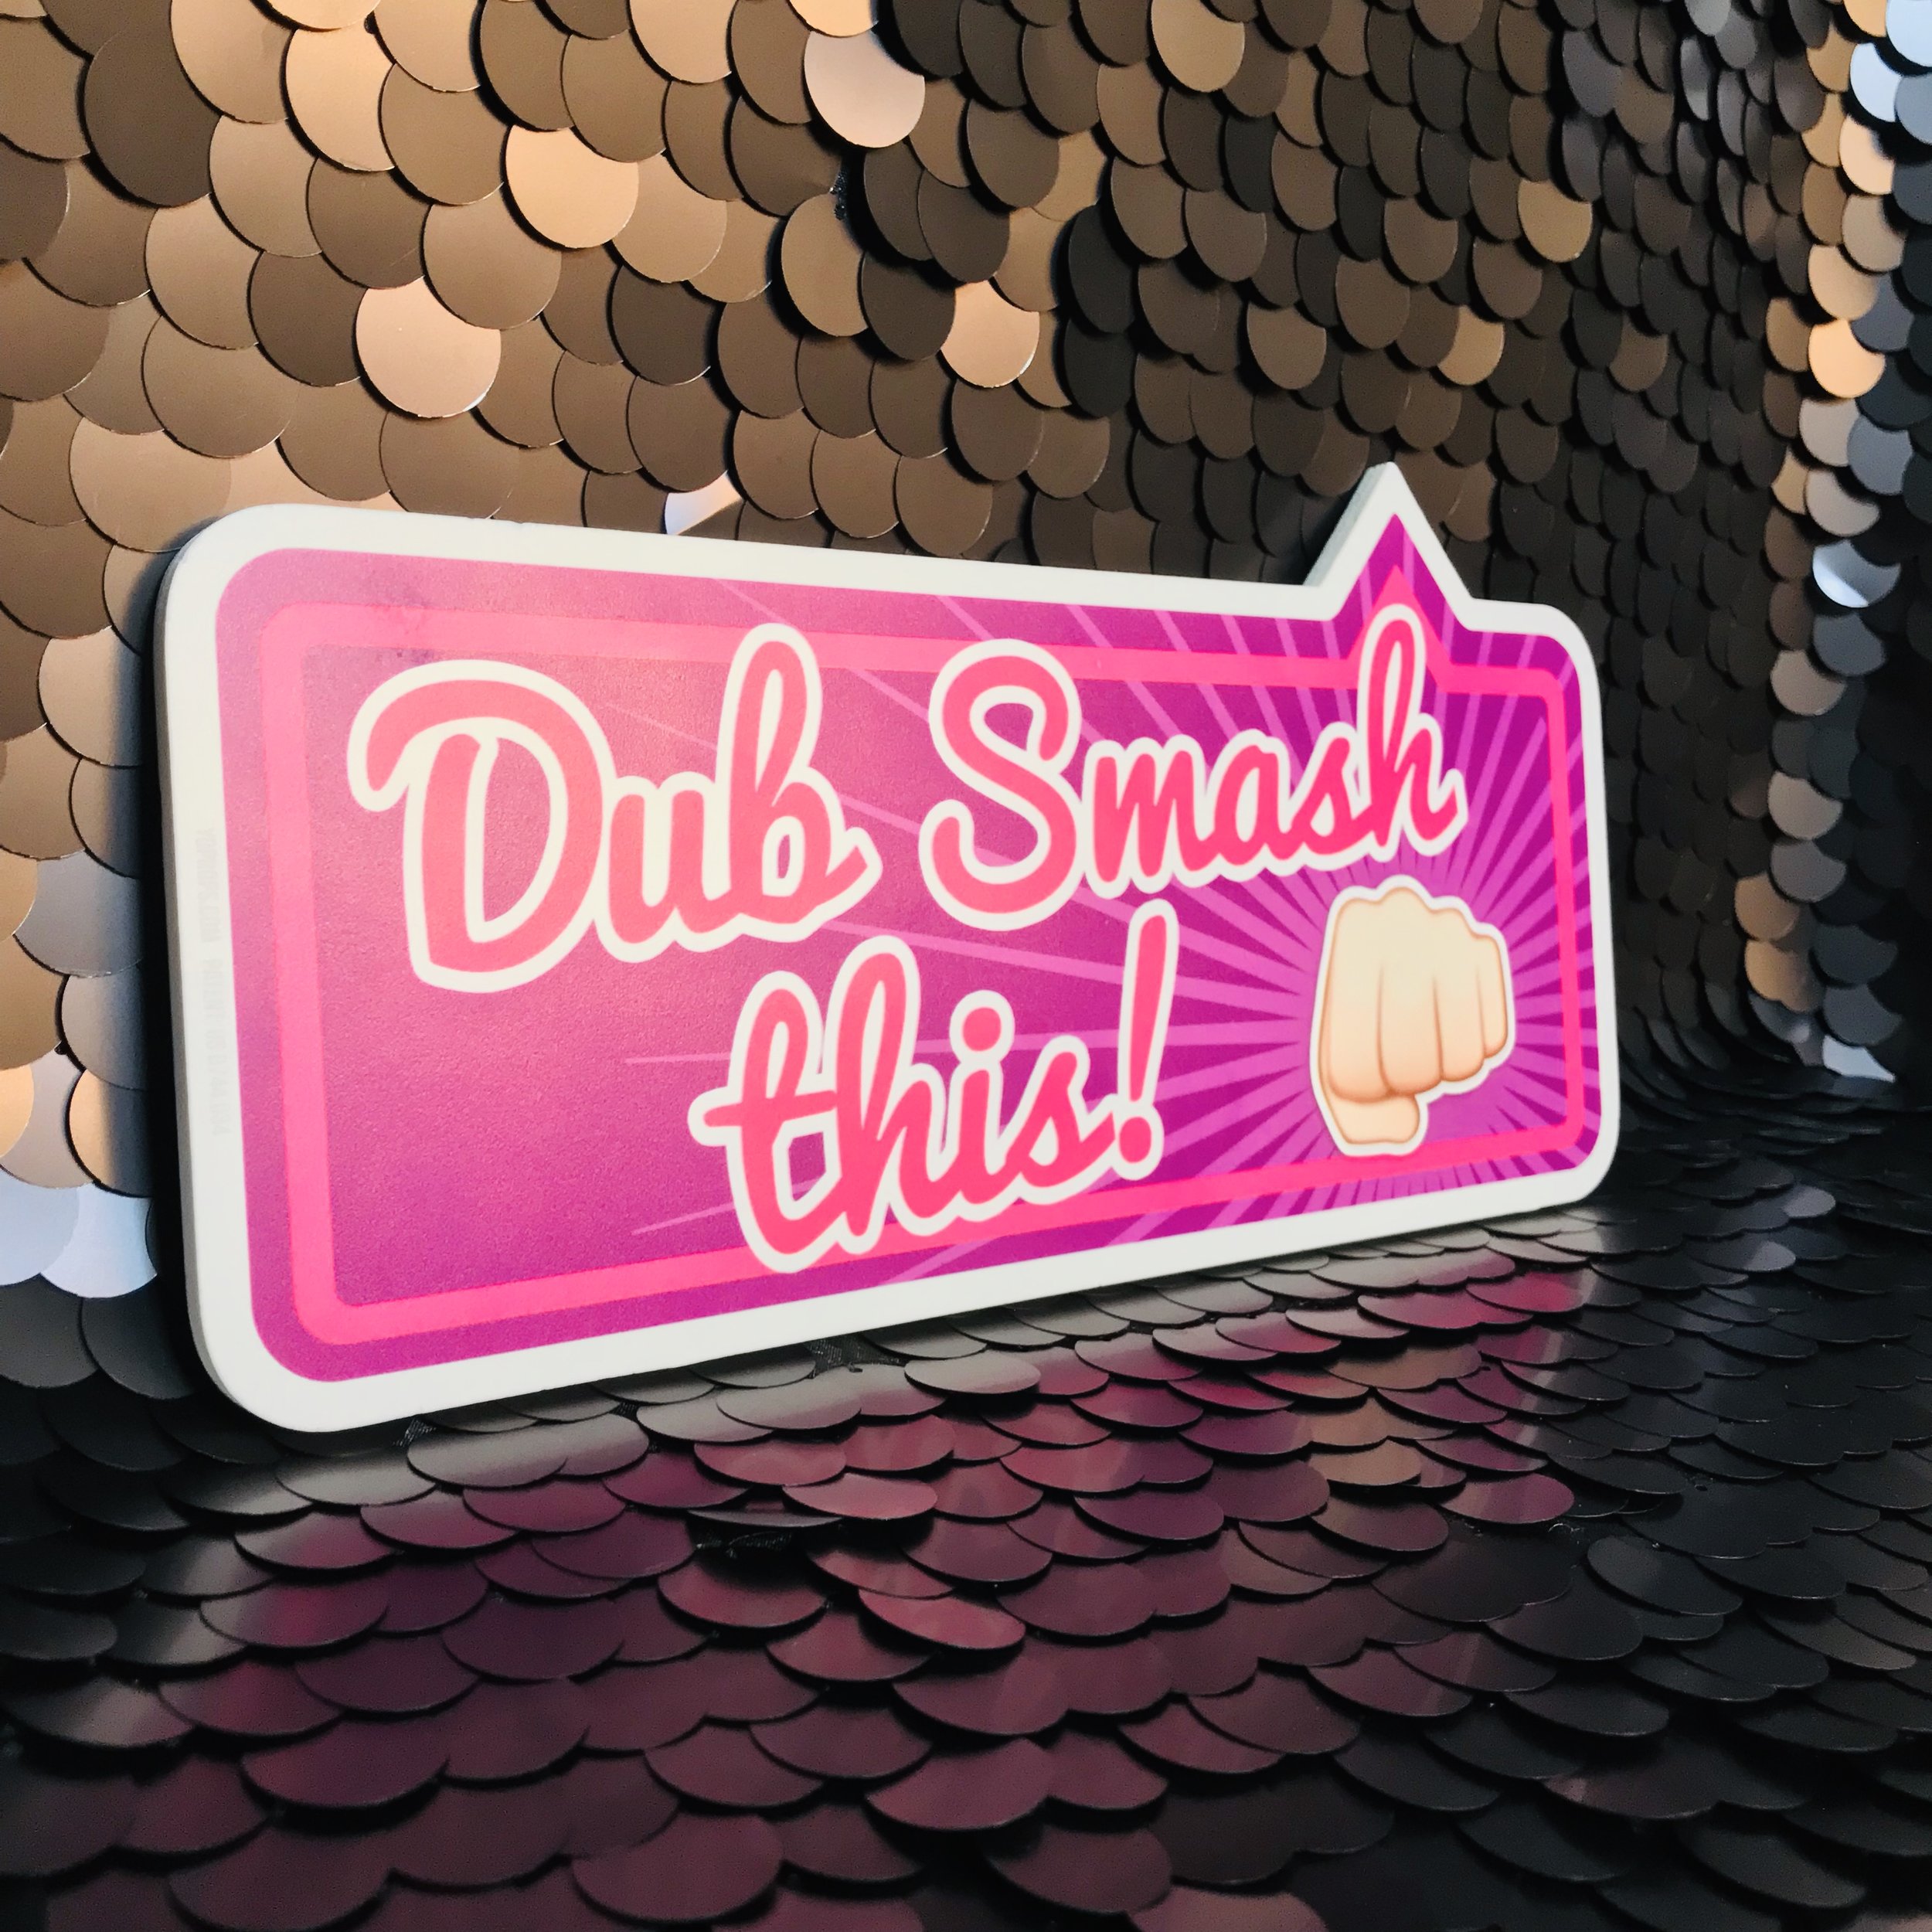 Dub Smash.jpg